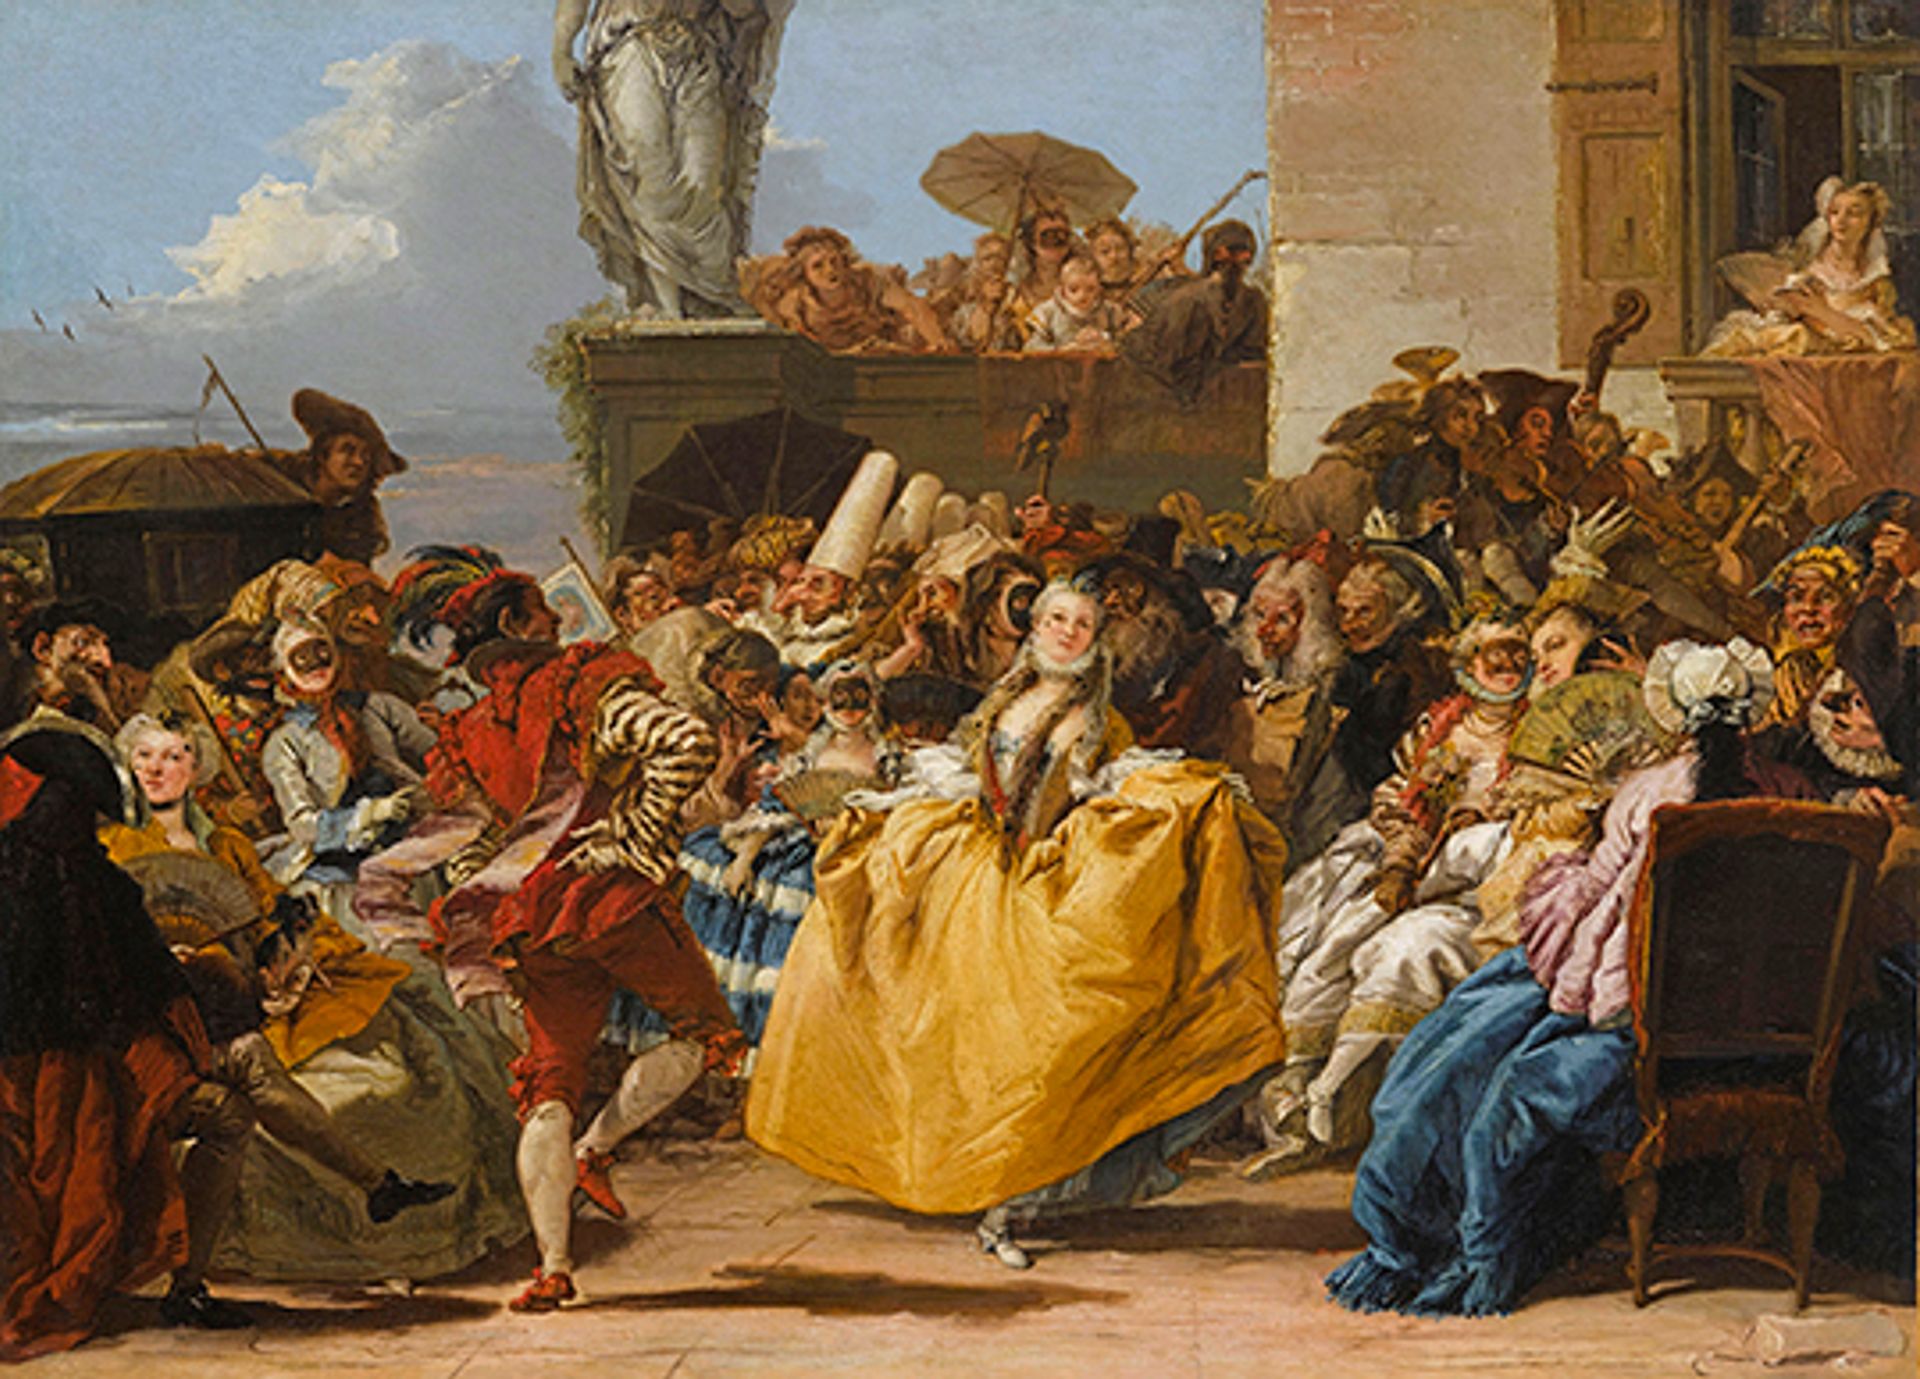 Giandomenico Tiepolo, Carnival Scene, or the Minuet (1754-55) © RMN-Grand Palais / Franck Raux